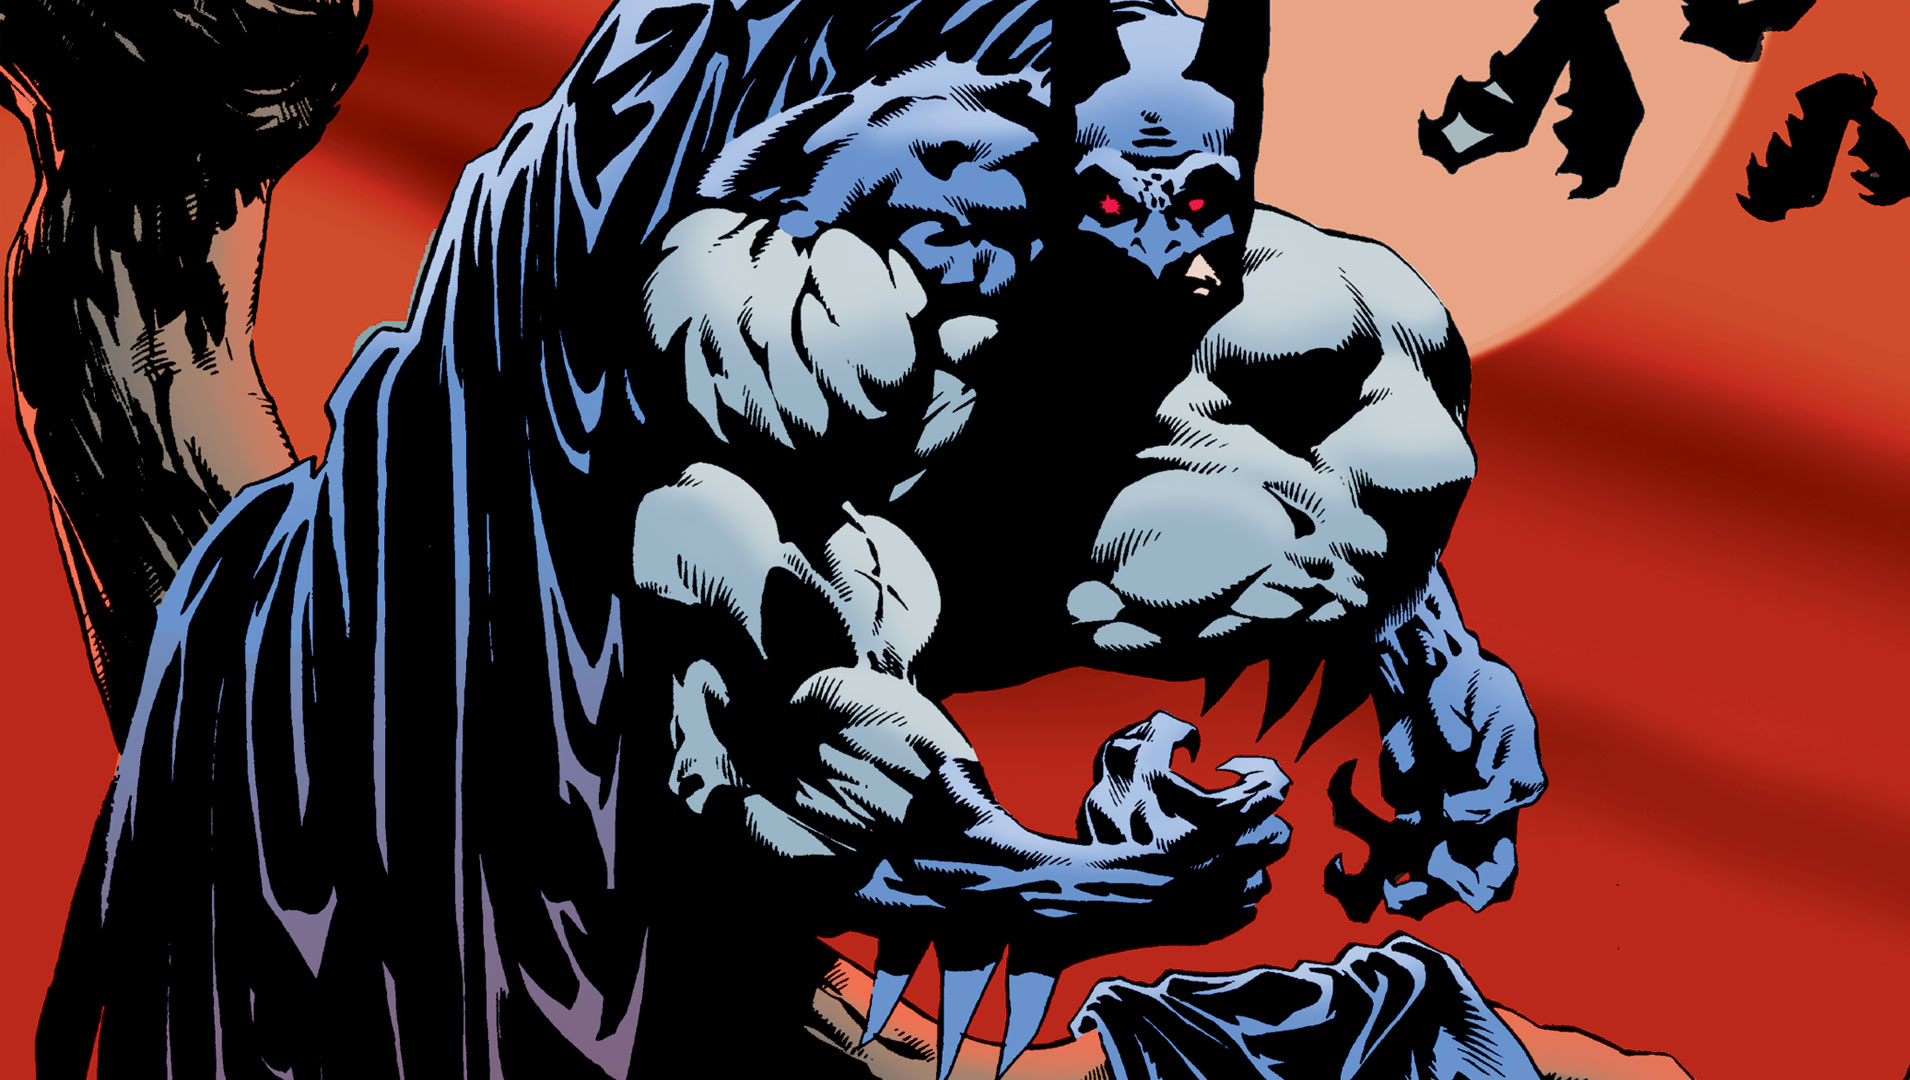 Elseworlds: spiegata l'assenza di Batman nel crossover thumbnail